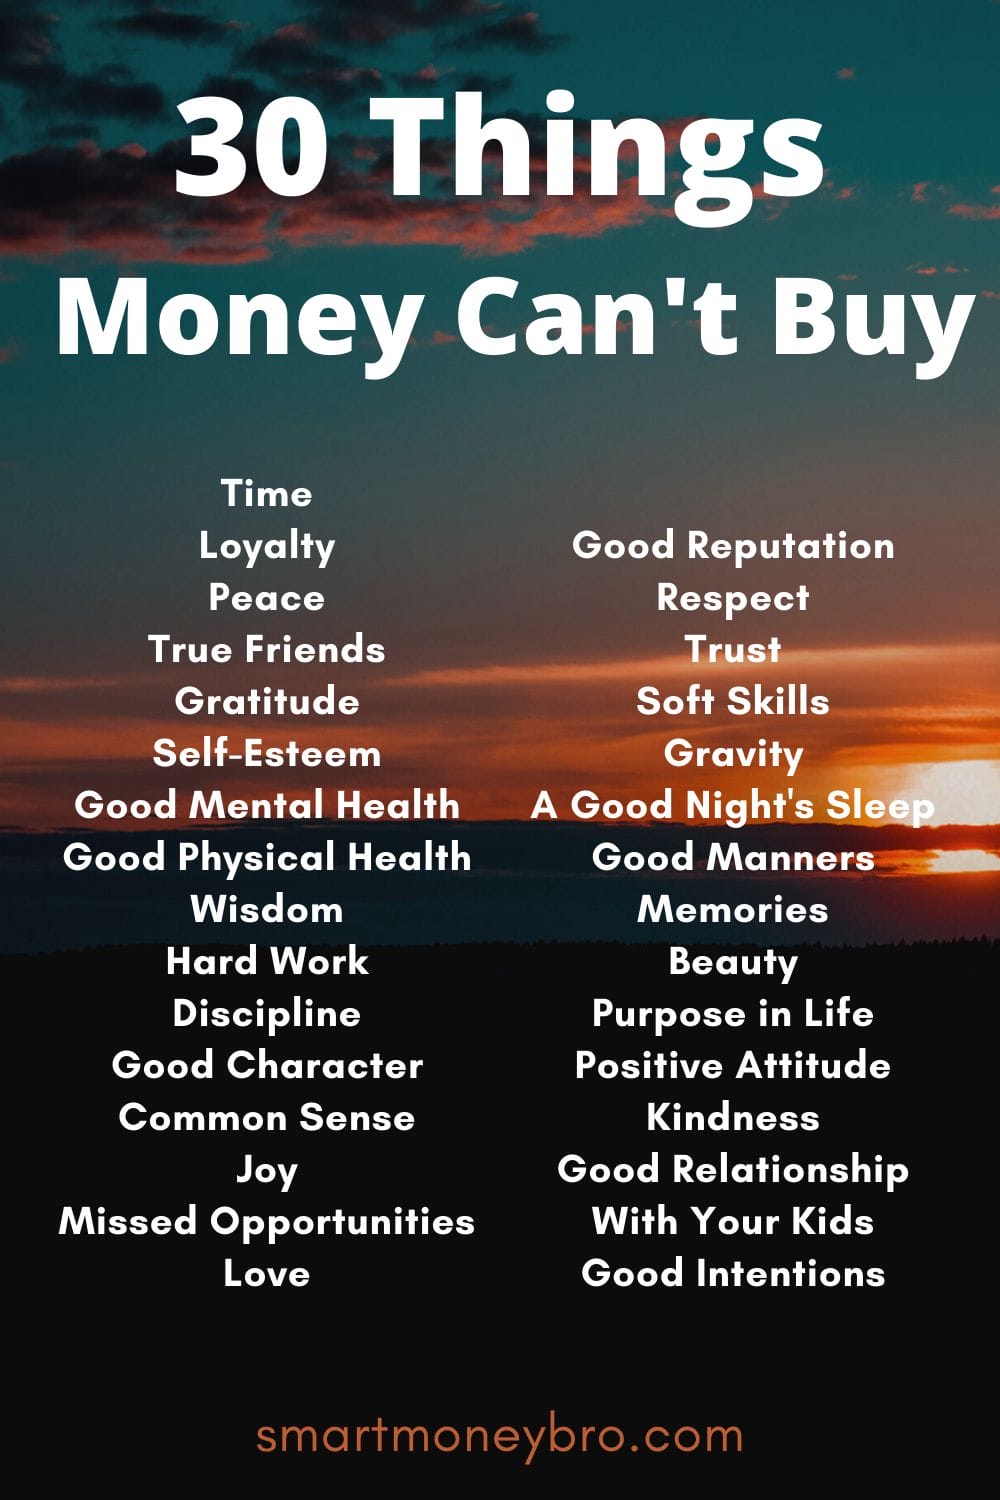 30 Things Money Can't Buy. Smart Money Bro.